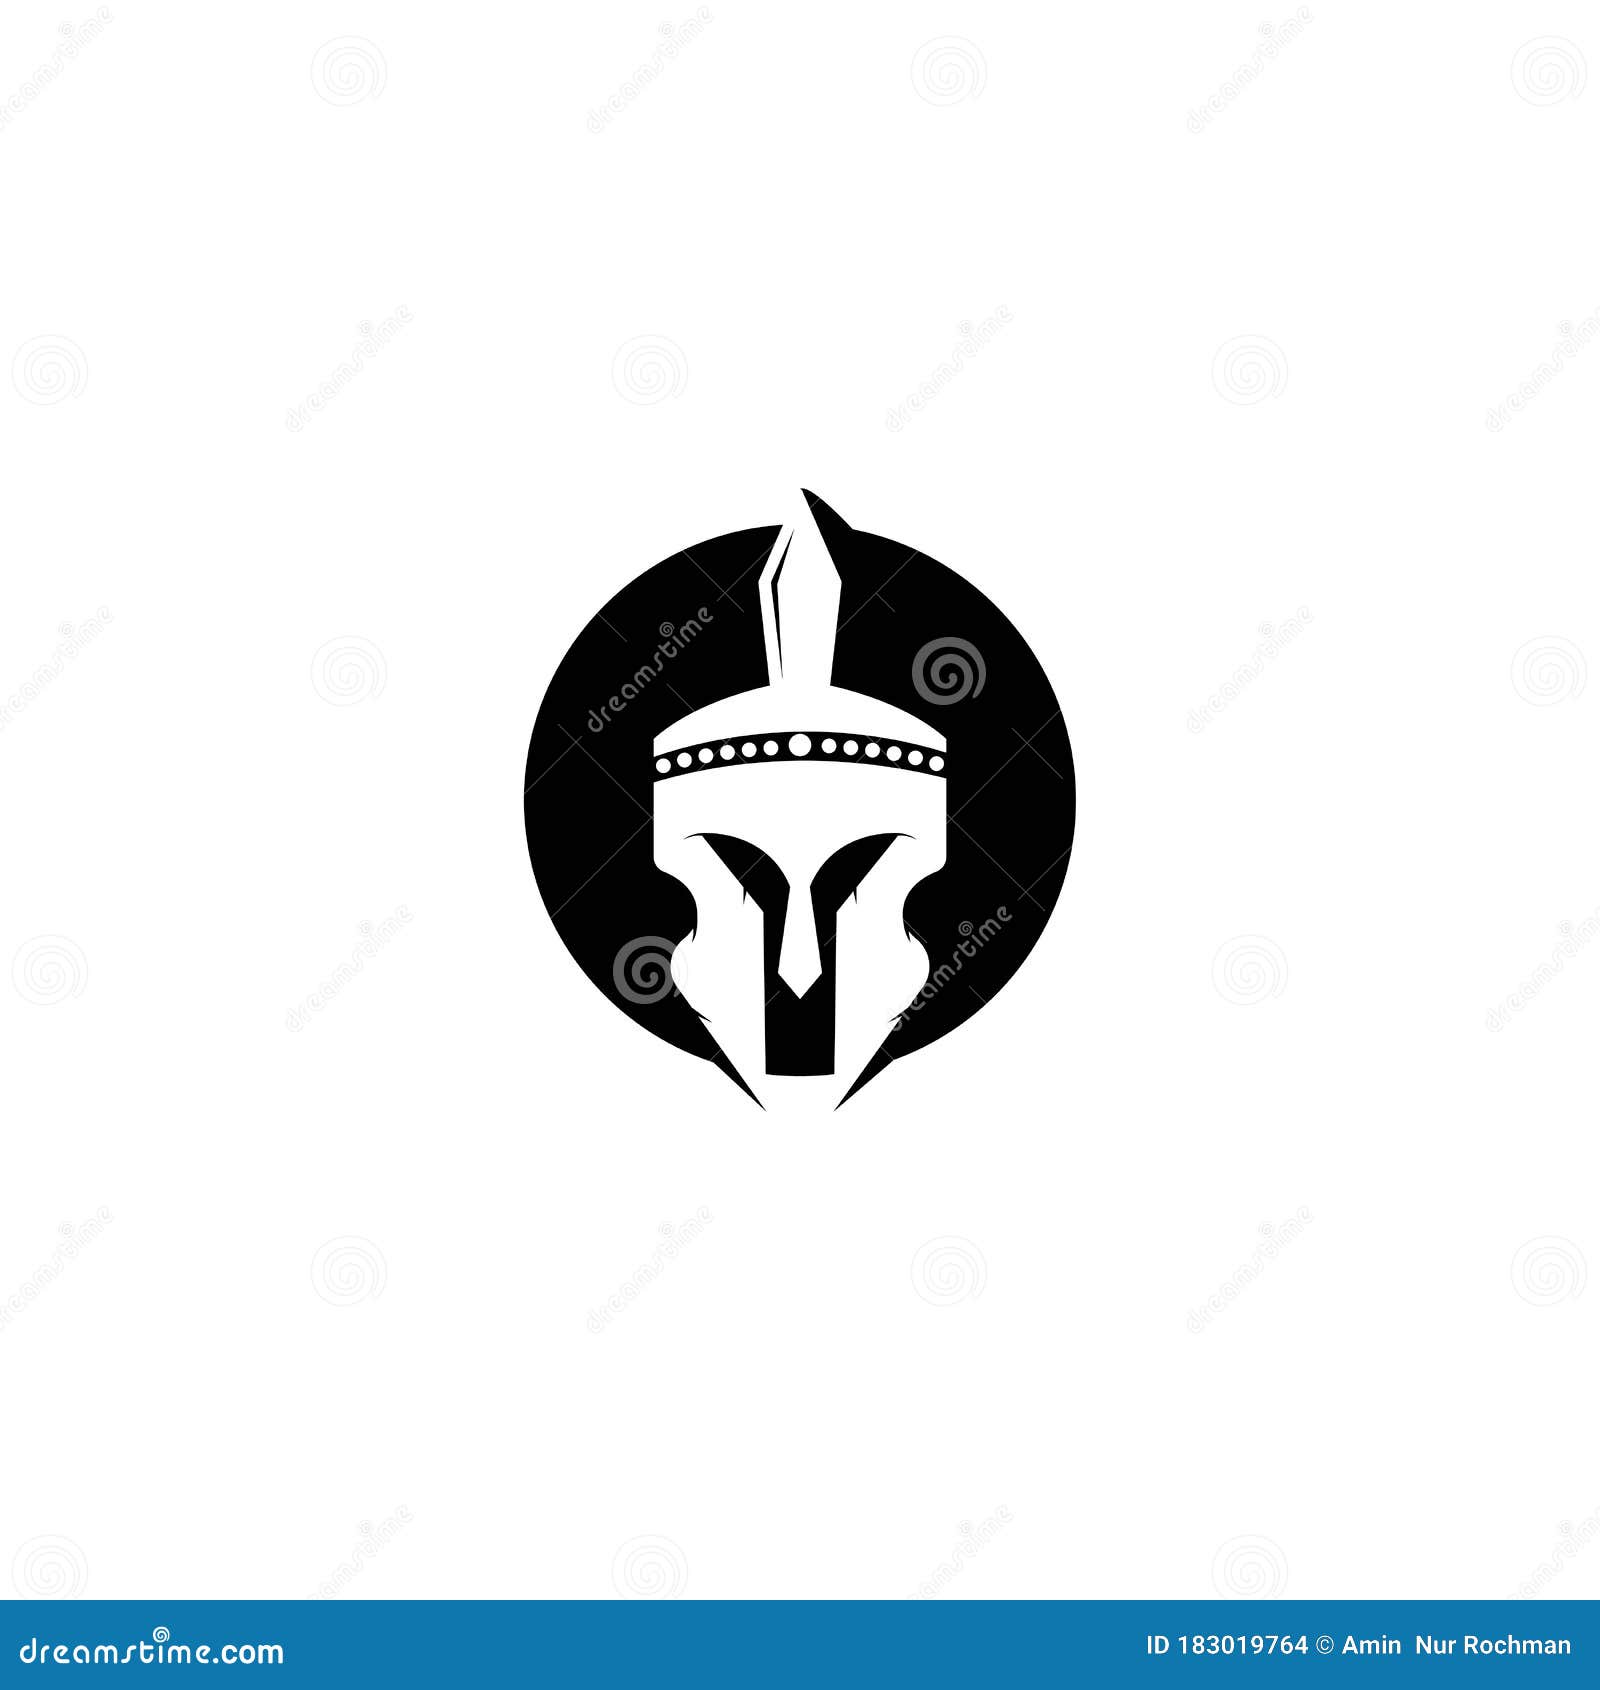 Spartan logo vector stock illustration. Illustration of icon - 183019764